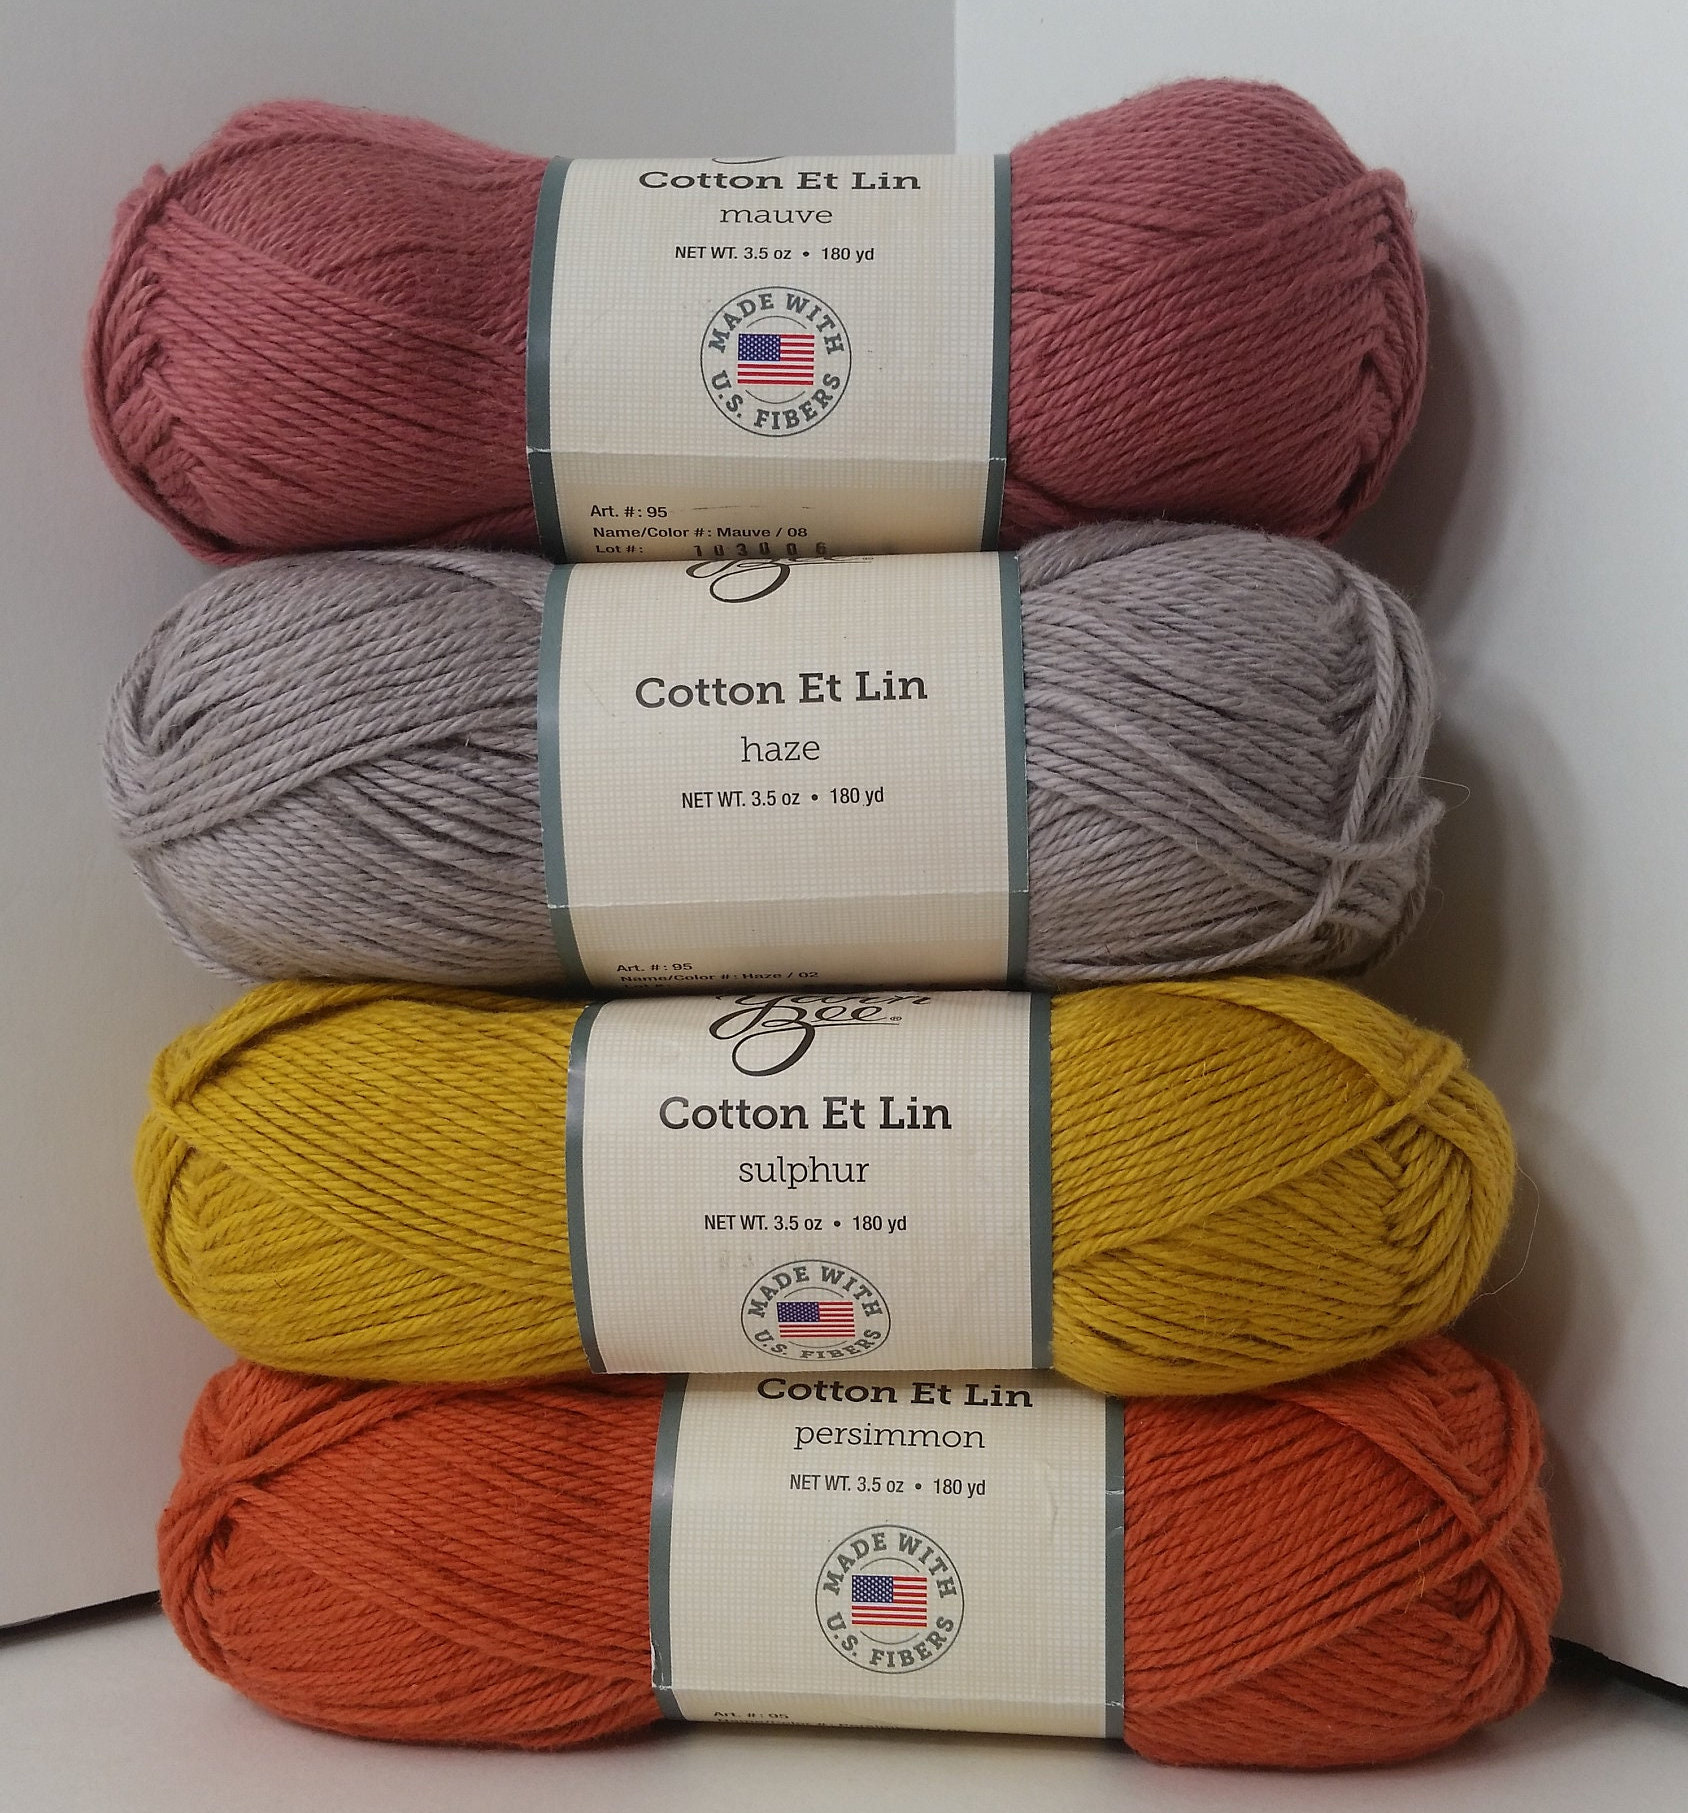 Cotton Merino - Pastel violet (143), Premium Yarn